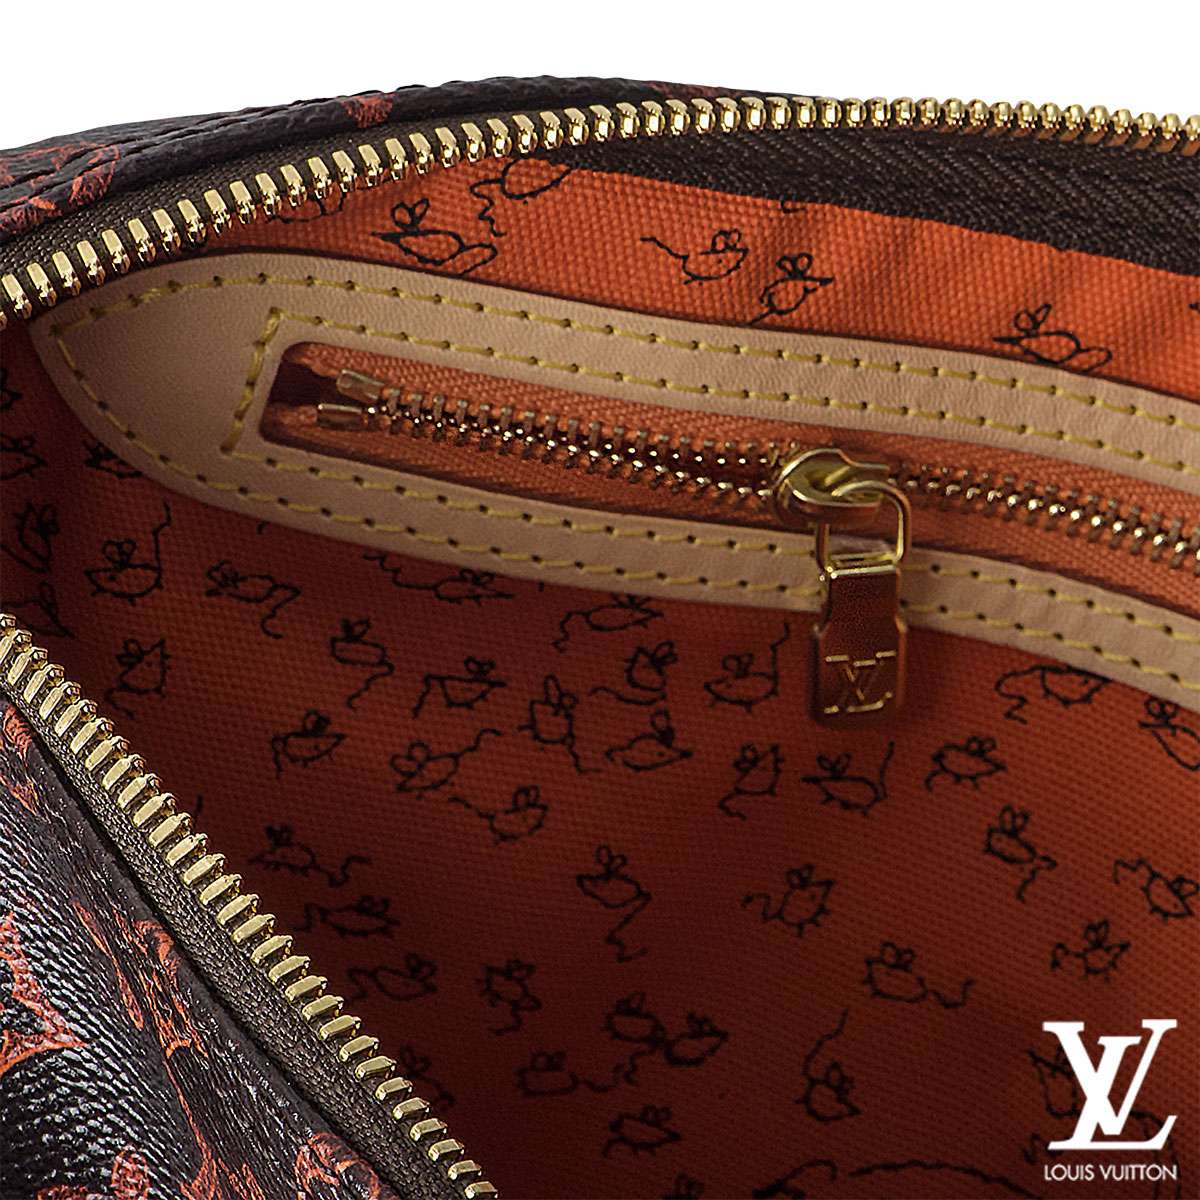 Louis Vuitton Ltd. Ed. grace Coddington Catogram Speedy Bandouliere 30 in  Brown